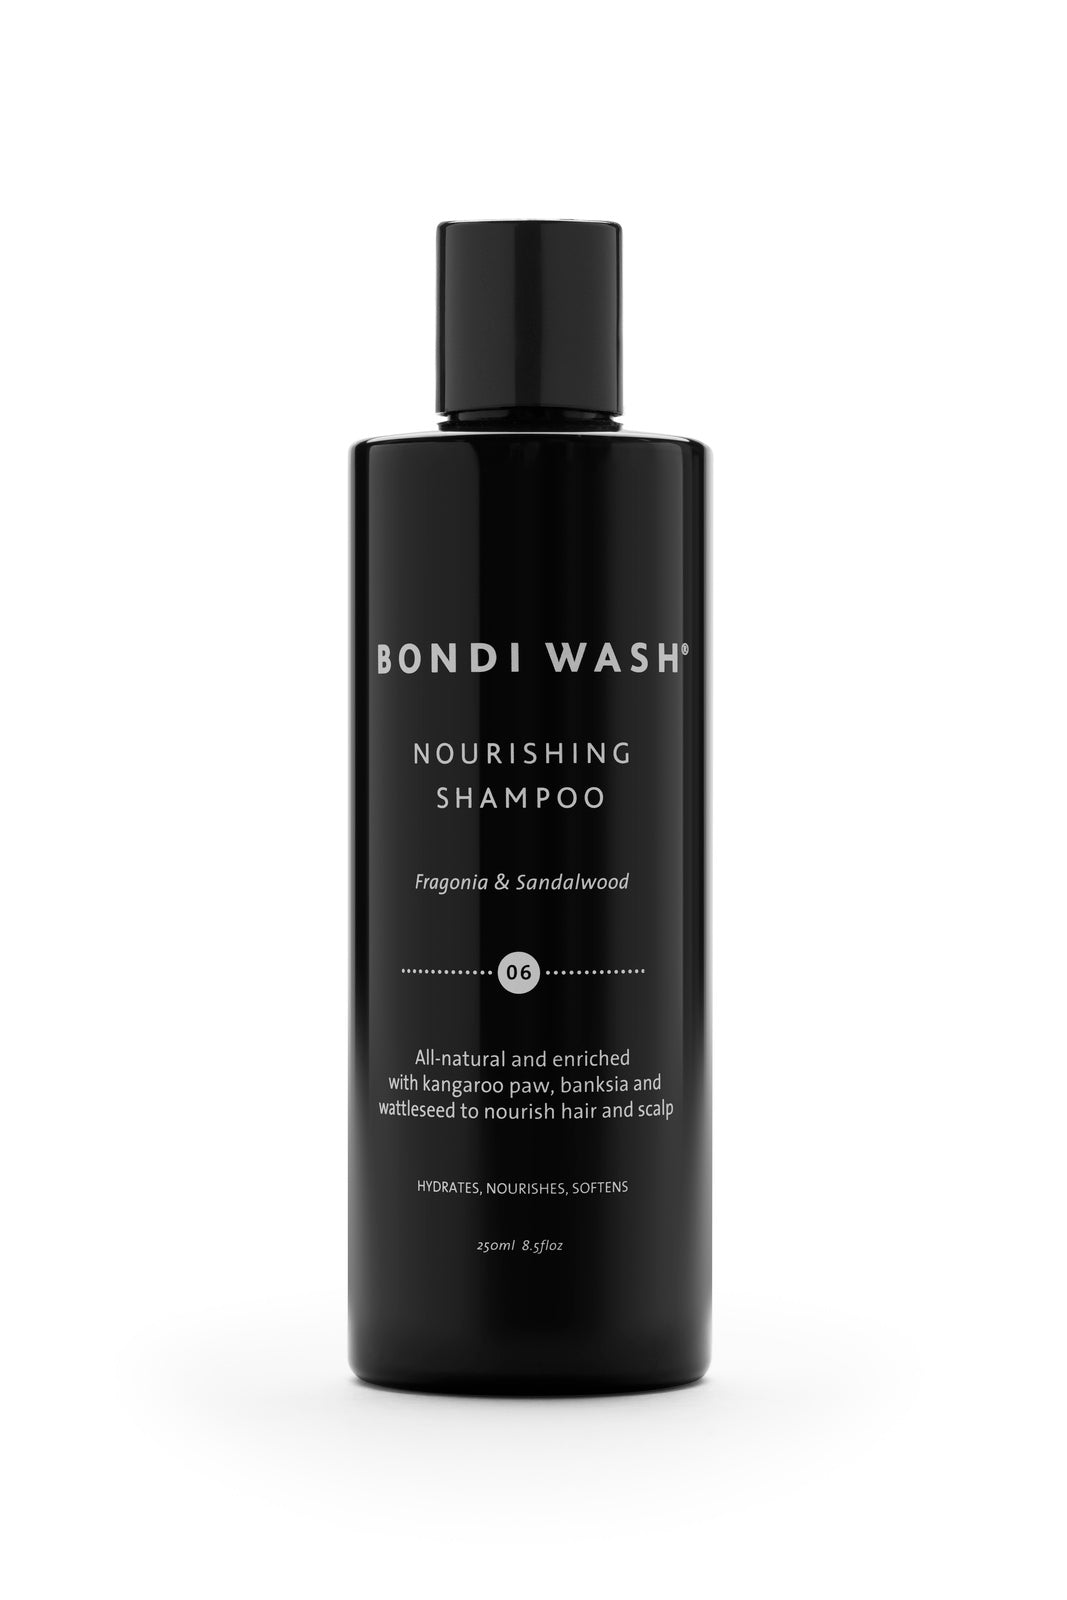 Bondi Wash, natural shampoo, nourishing shampoo, bondi wash nourishing shampoo, nourished nederland, nourished, bondi wash europe.